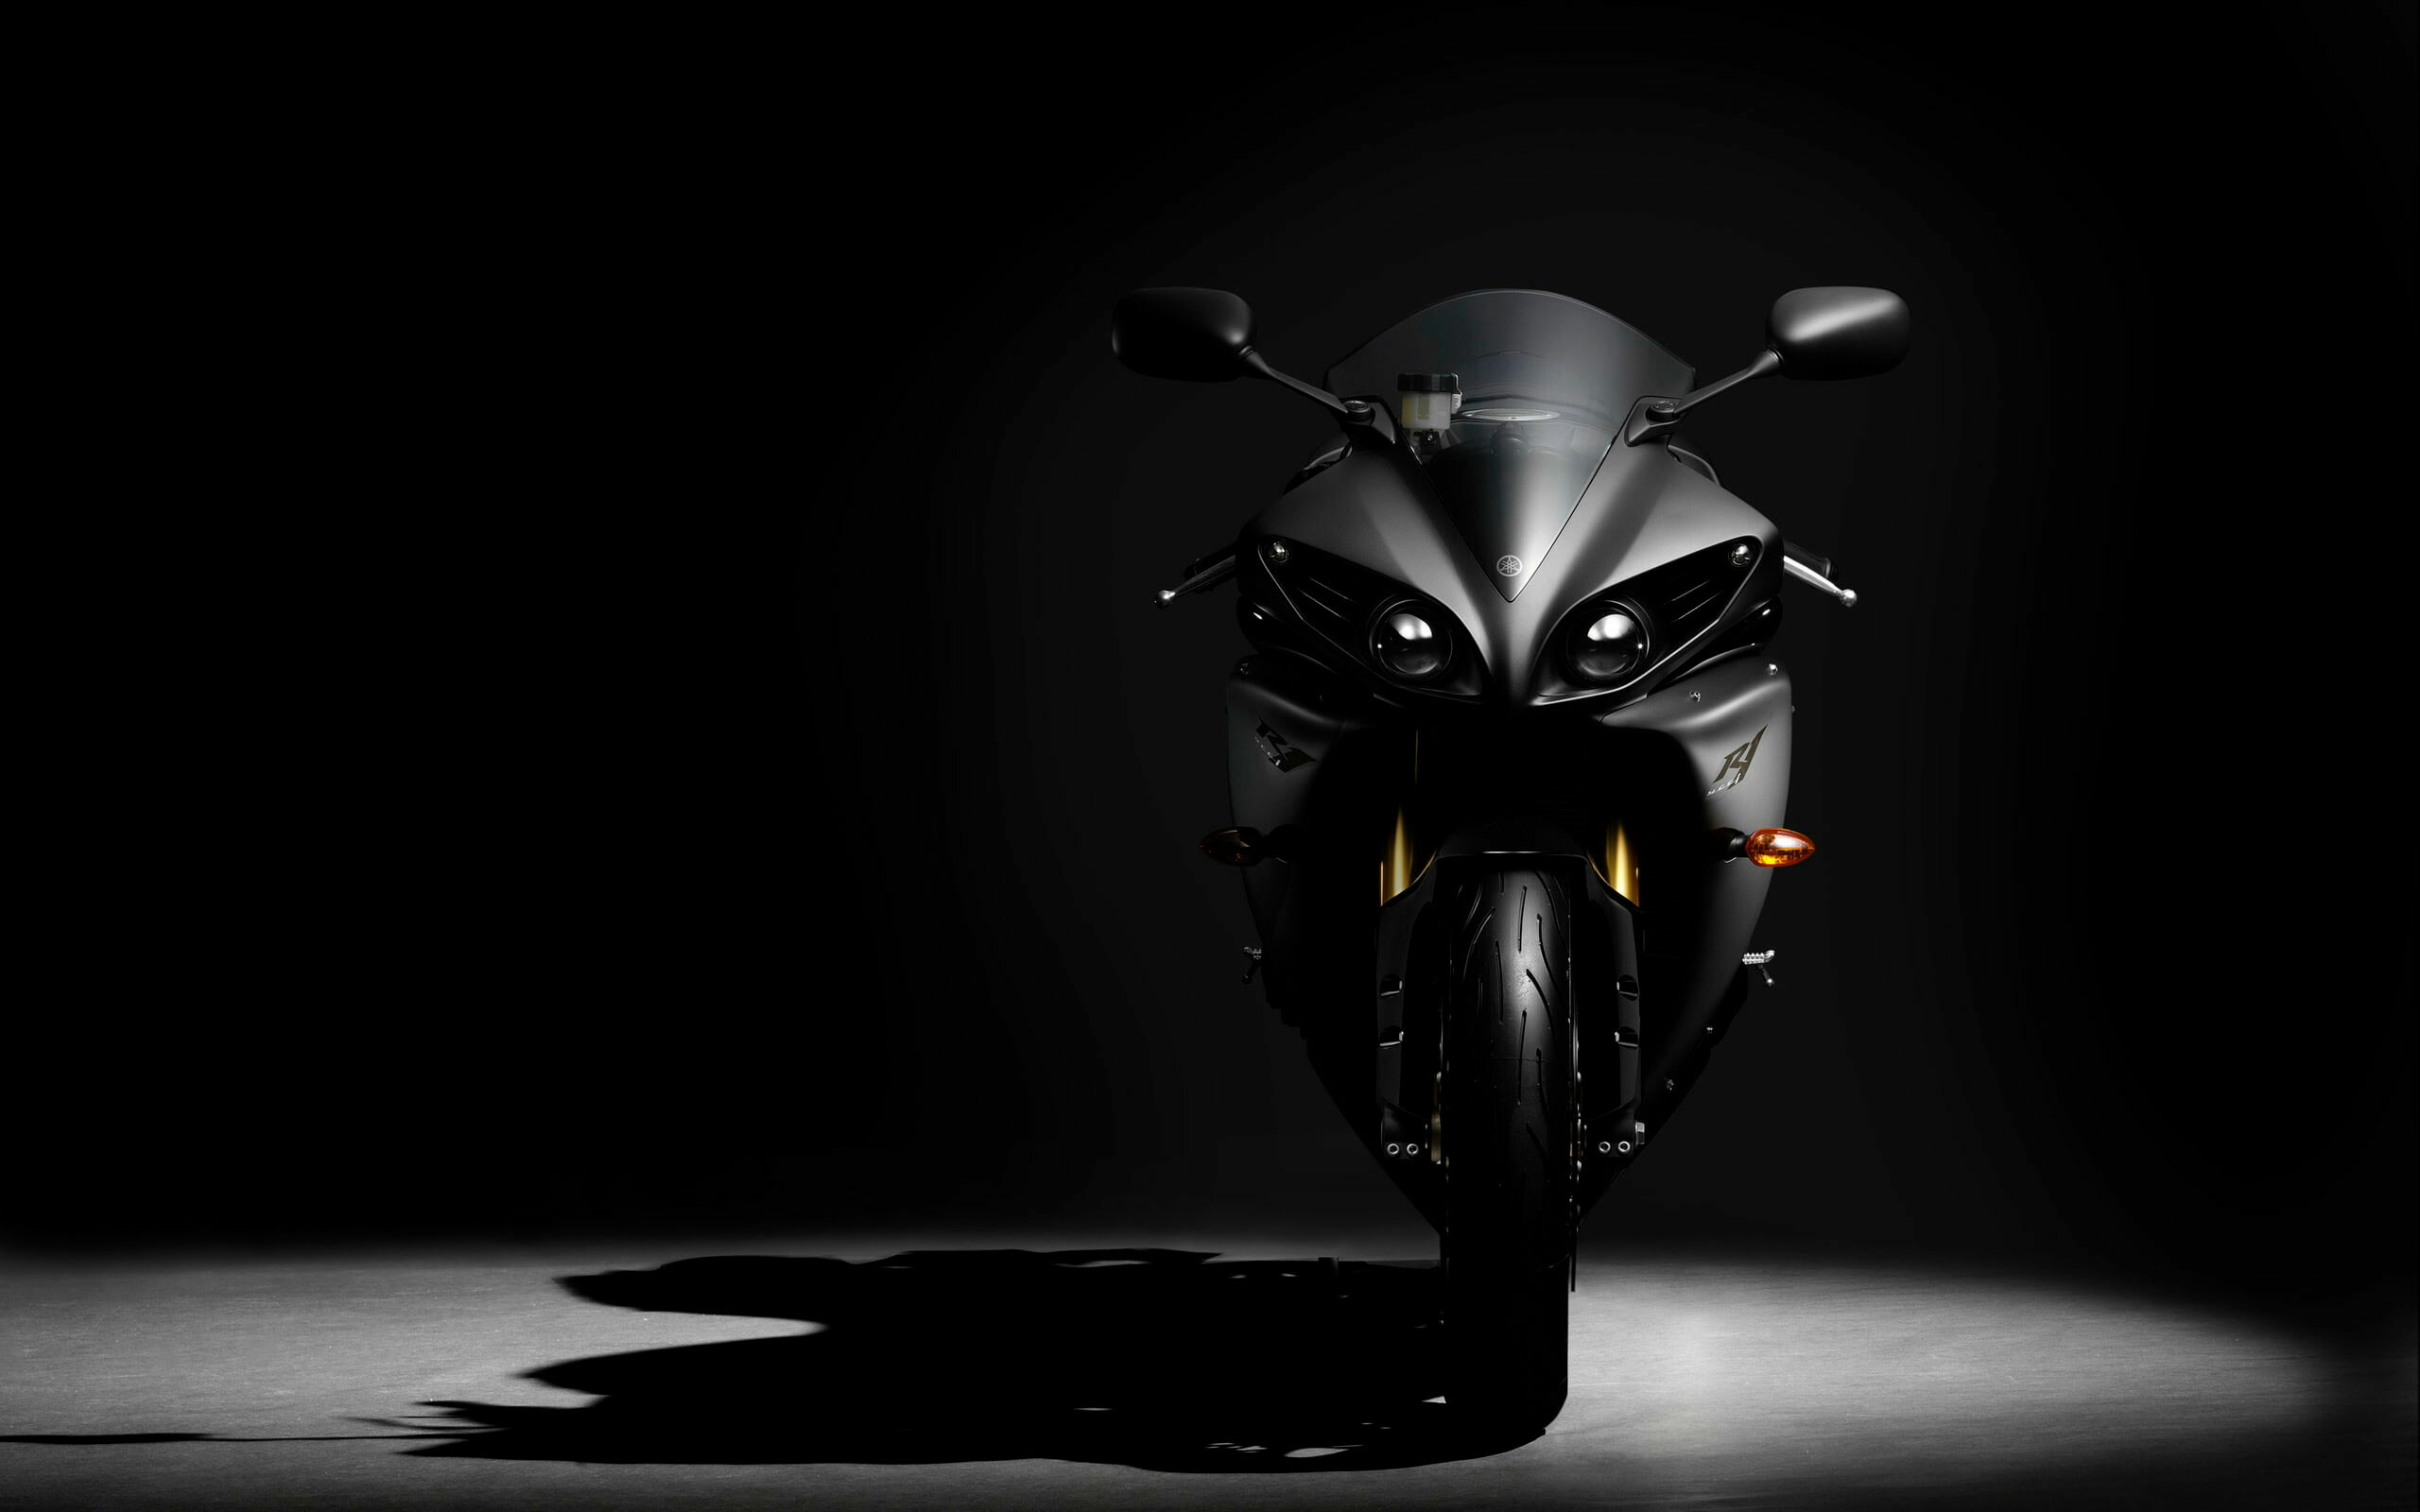 Yamaha YZF R1 HD wallpaper, Black sport motorcycle, Racing beast, Speed and style, 2560x1600 HD Desktop